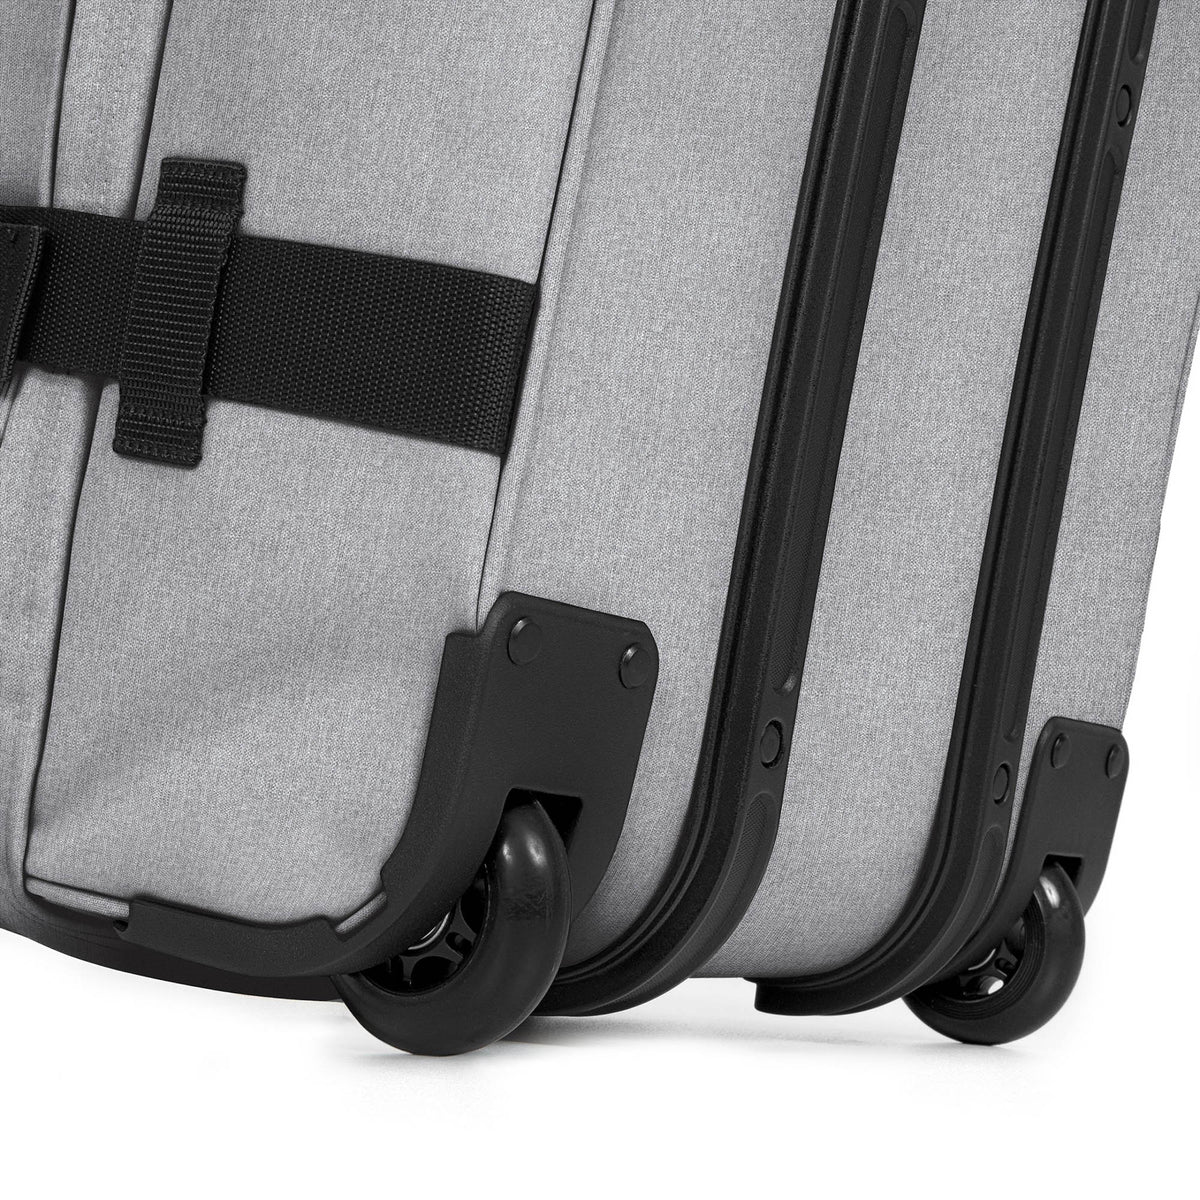 Eastpak Transit'R L Suitcase - Sunday Grey